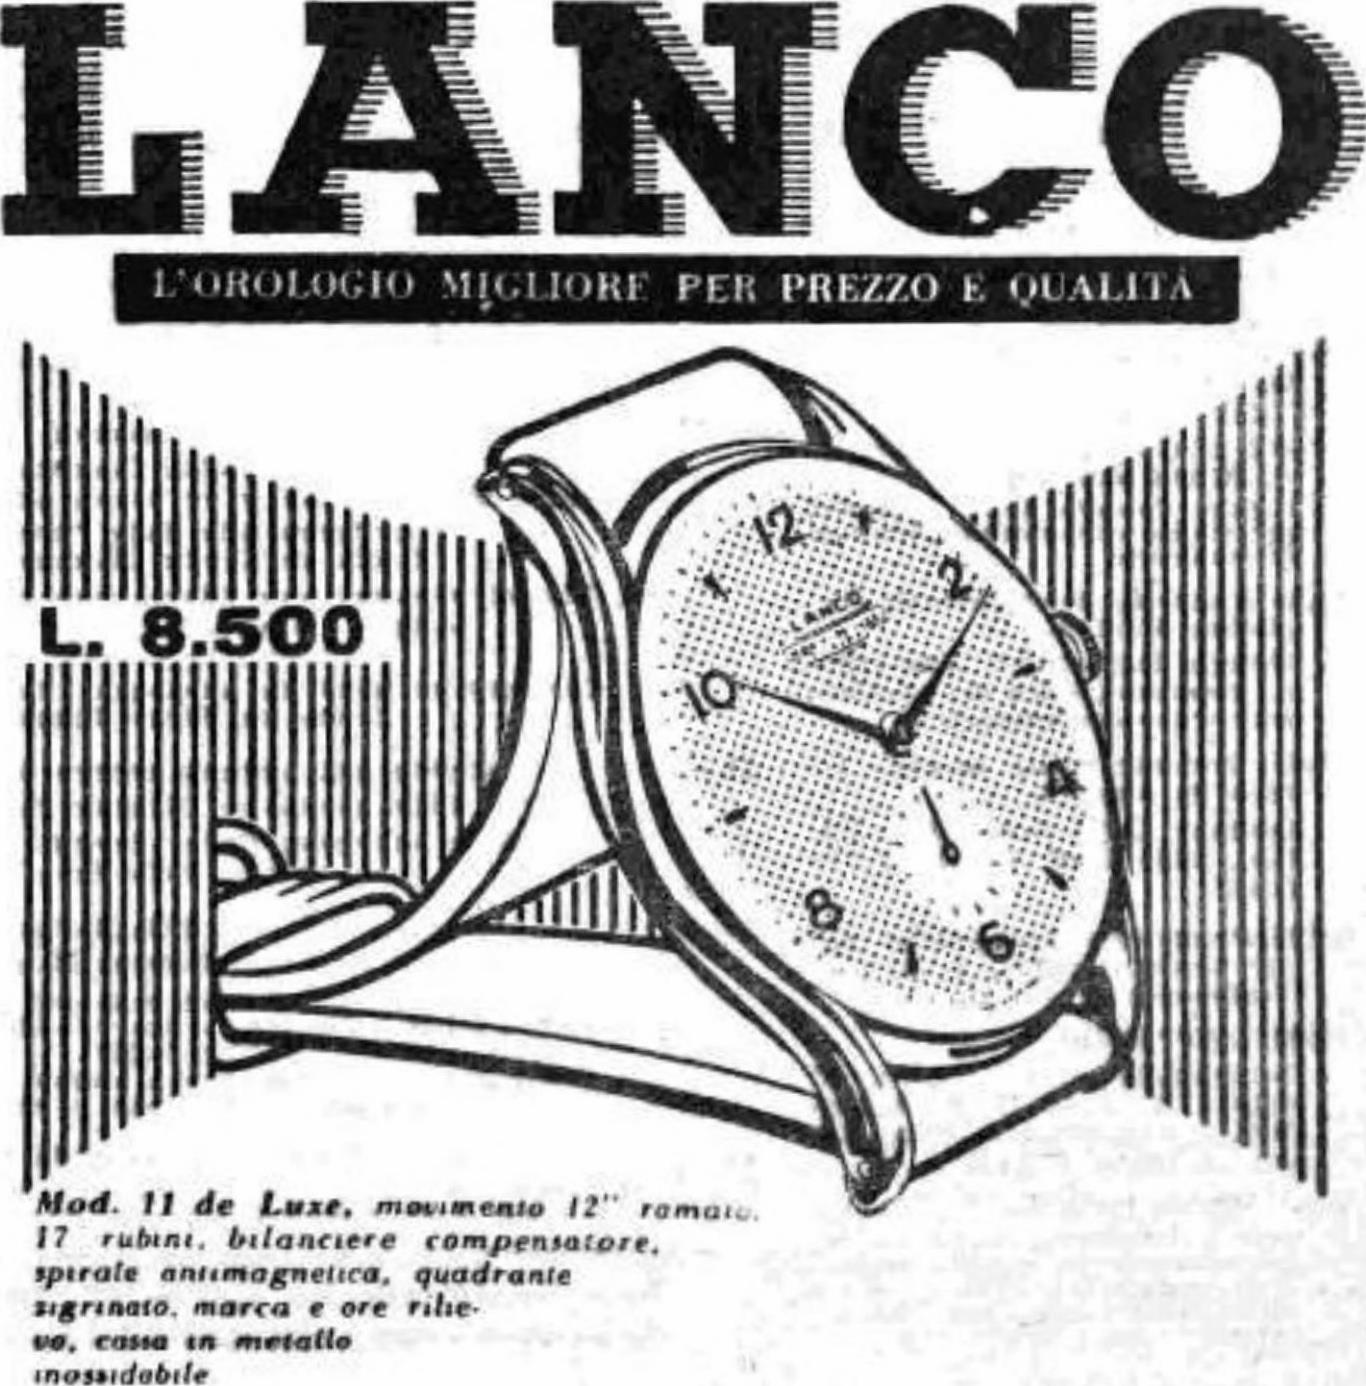 Lanco 1952 62.jpg